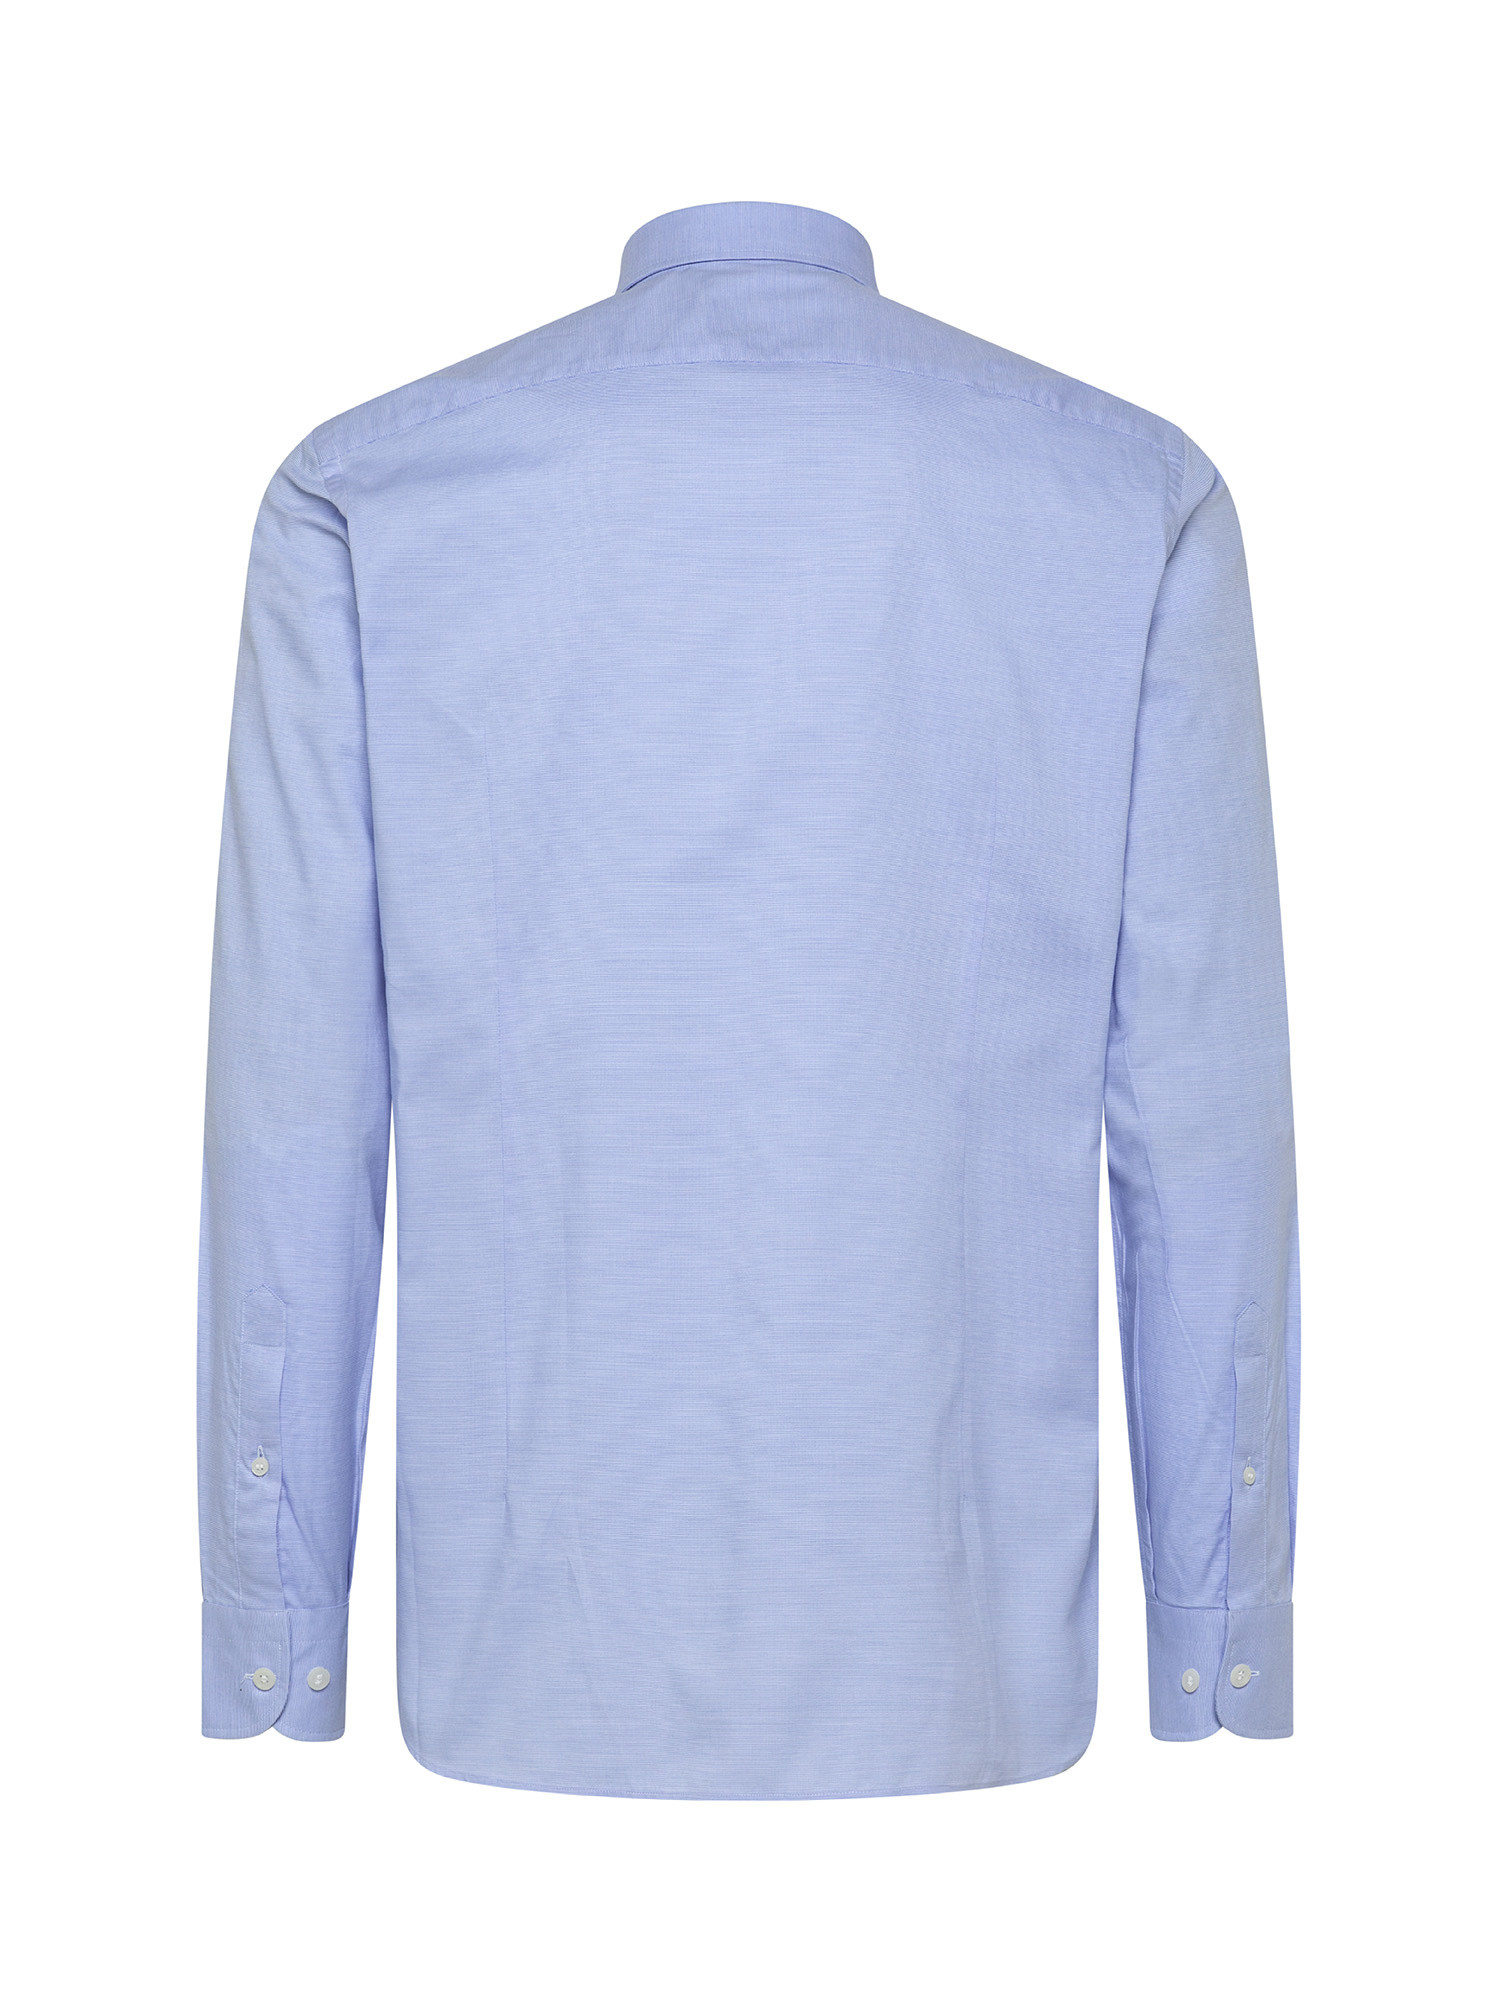 Camicia slim fit in puro cotone, Azzurro celeste, large image number 2